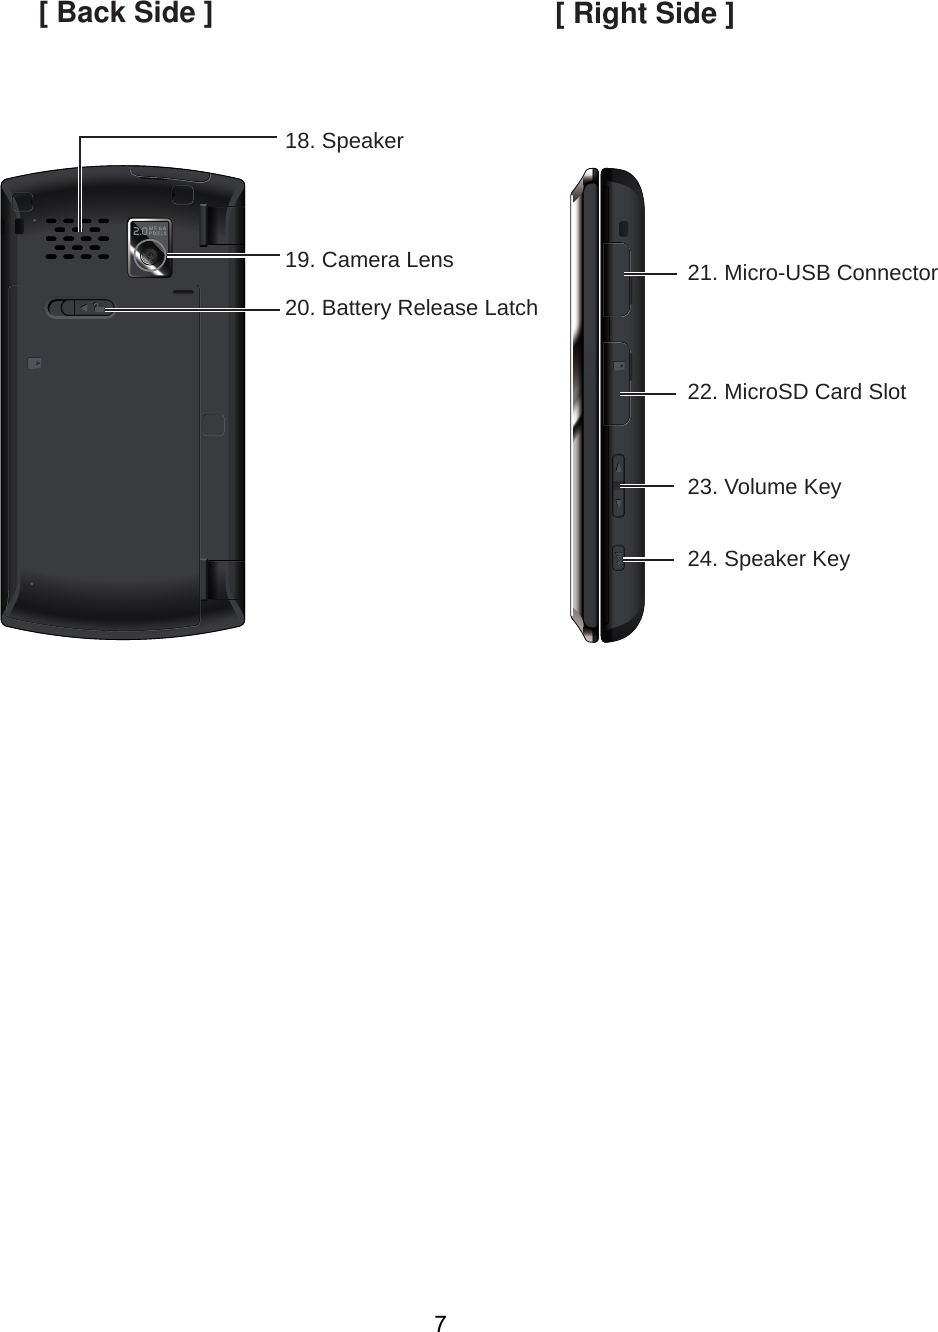 SCP-6760 KEY LAYOUT [ Back Side ] [ Right Side ]21. Micro-USB Connector22. MicroSD Card Slot23. Volume Key24. Speaker Key18. Speaker19. Camera Lens20. Battery Release Latch7